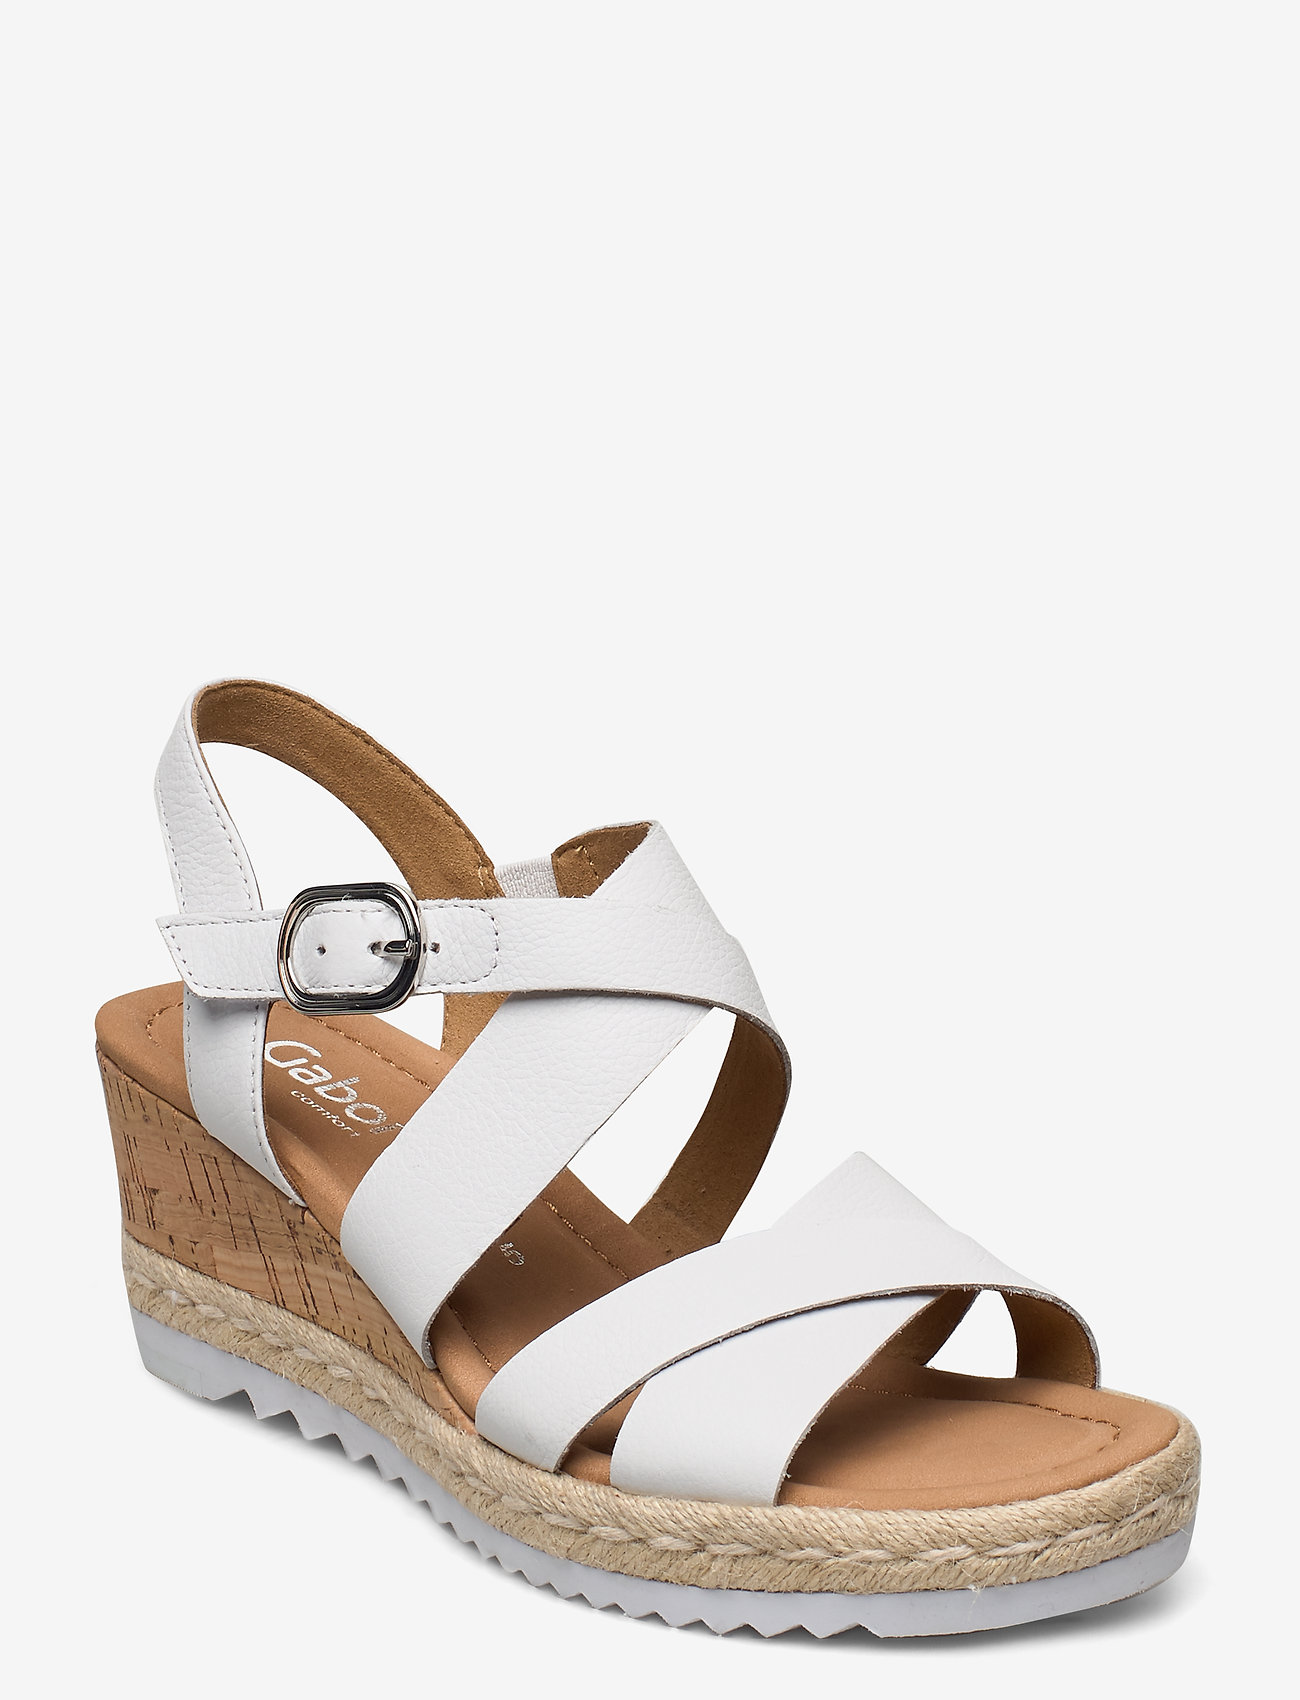 gabor white sandals